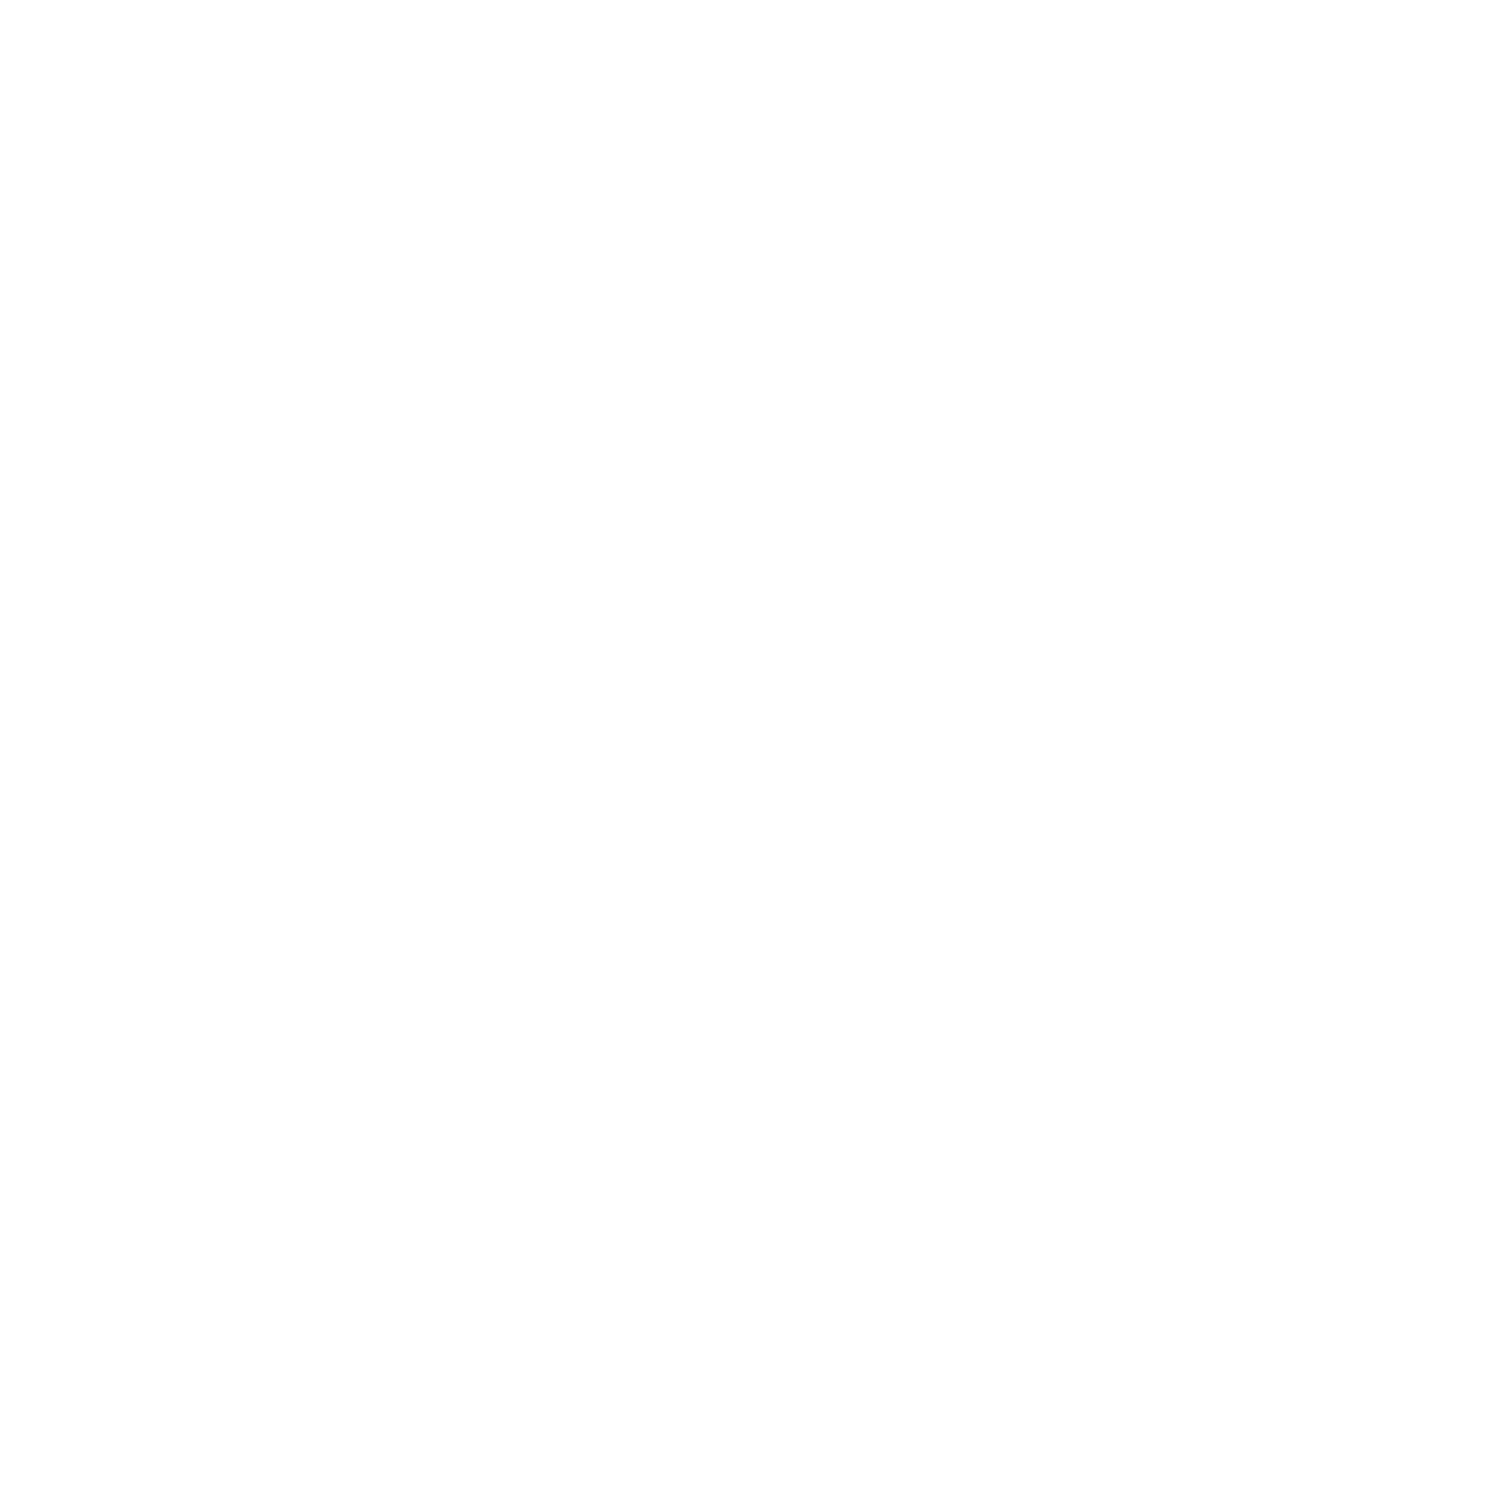 Qatar Islamic Bank logo pour fonds sombres (PNG transparent)